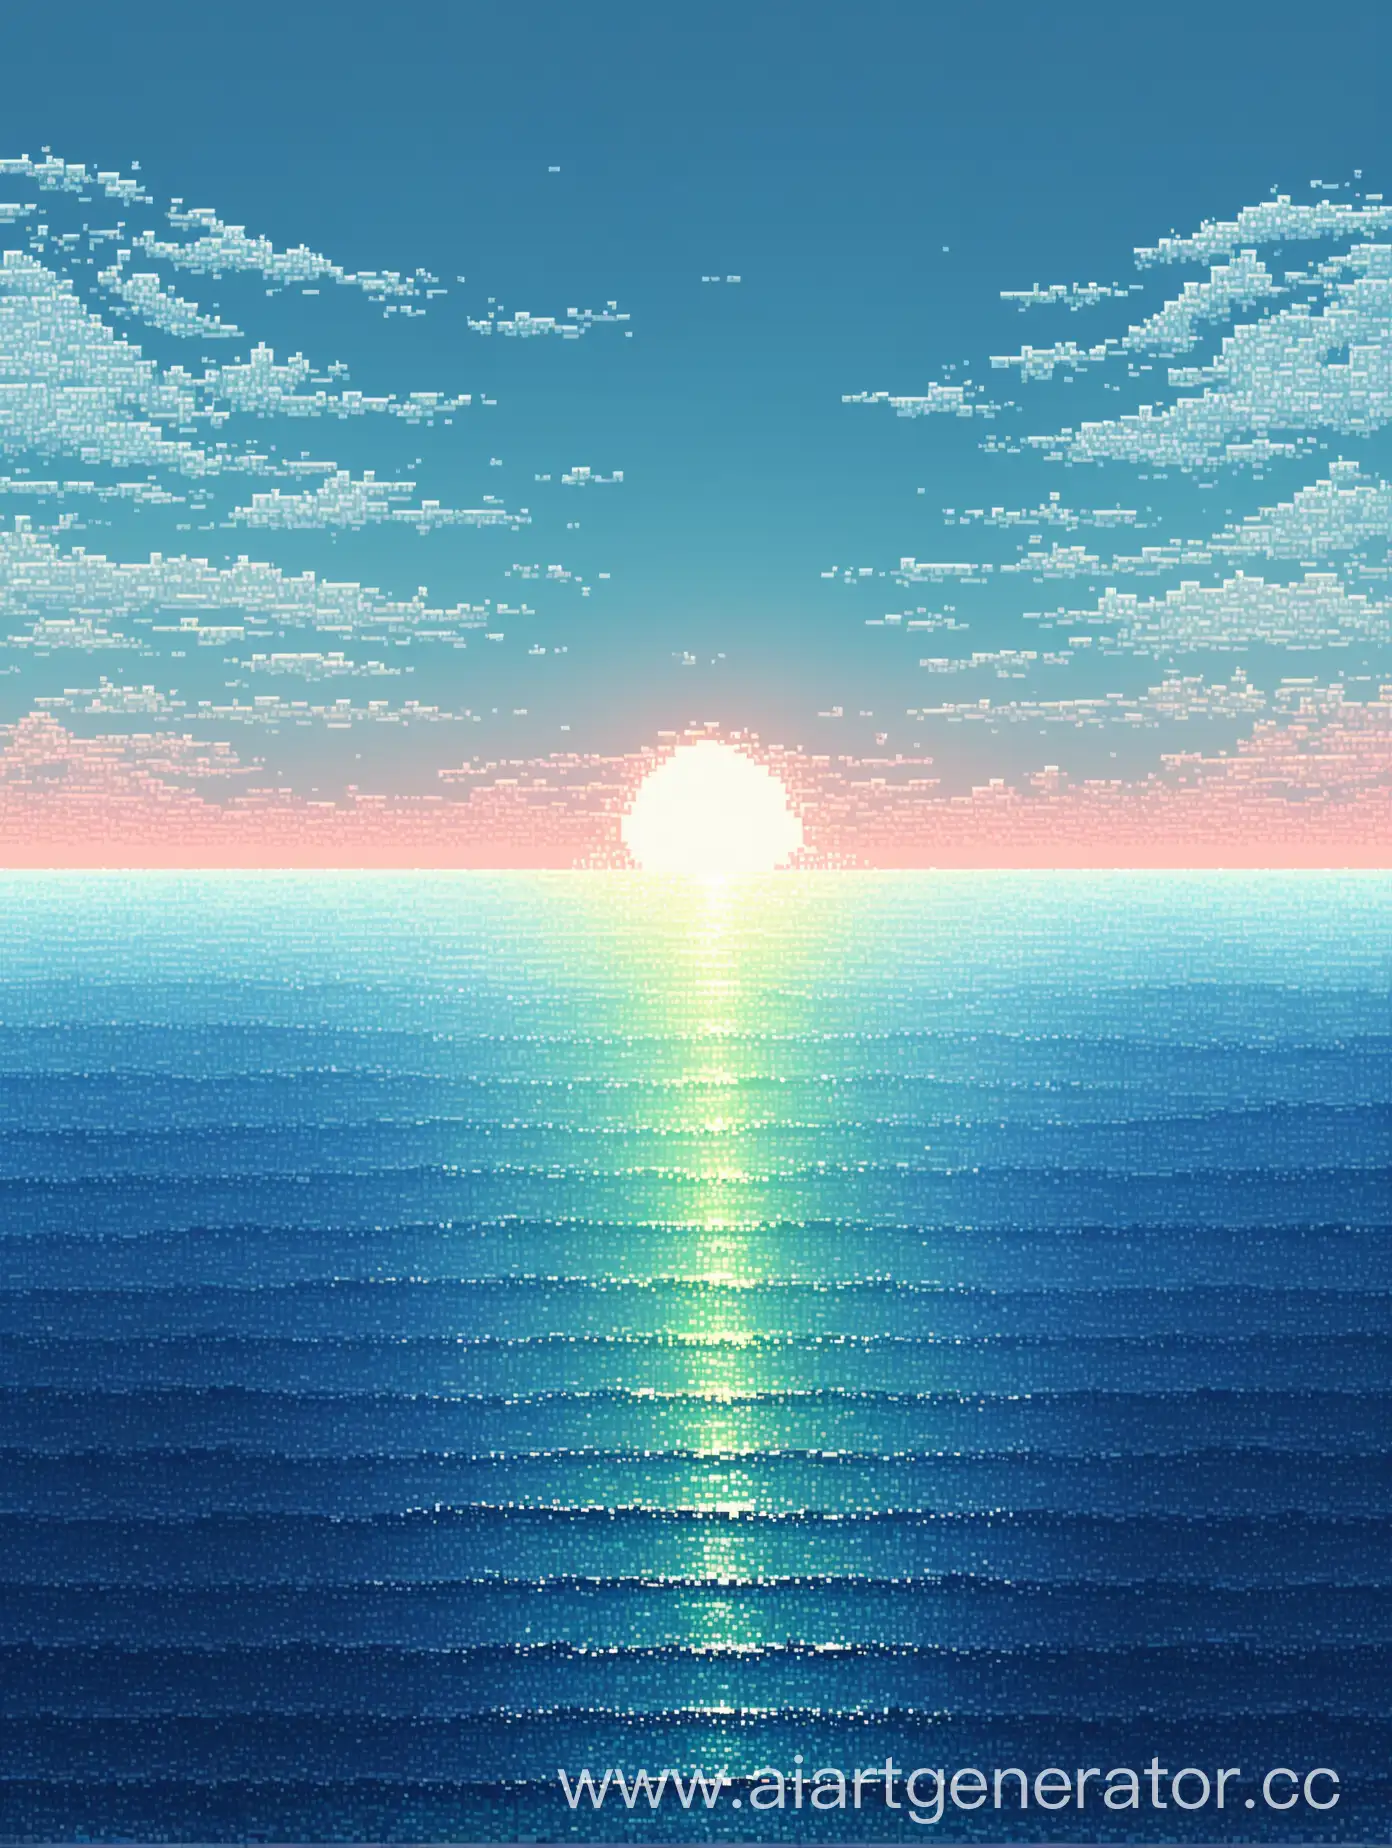 Open-Ocean-Pixel-Horizon-Calm-Seascape-in-Pixel-Art-Style